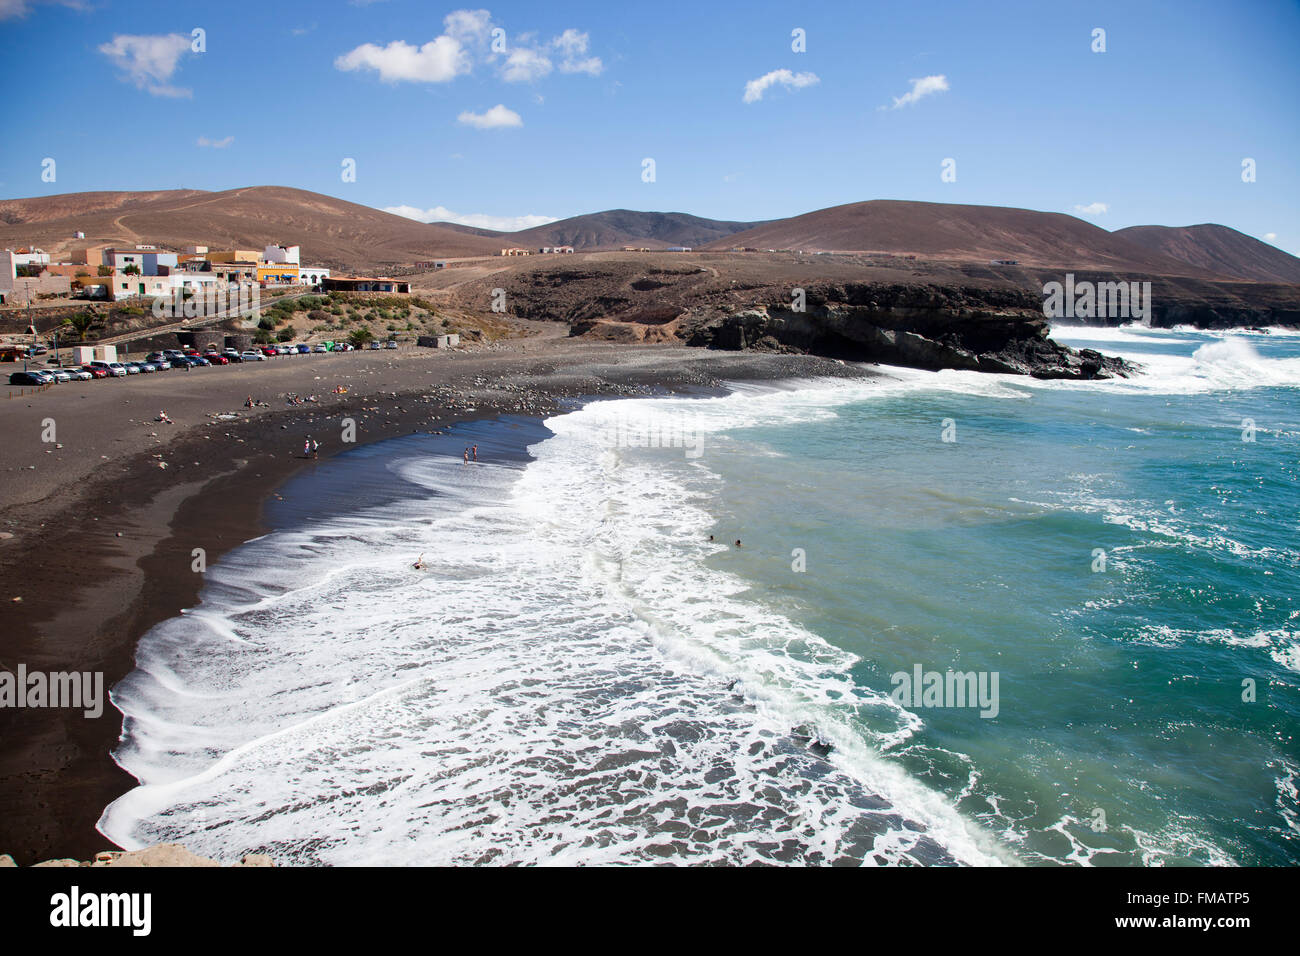 Ajuy village, Fuerteventura island, Canary archipelago, Spain, Europe Stock Photo